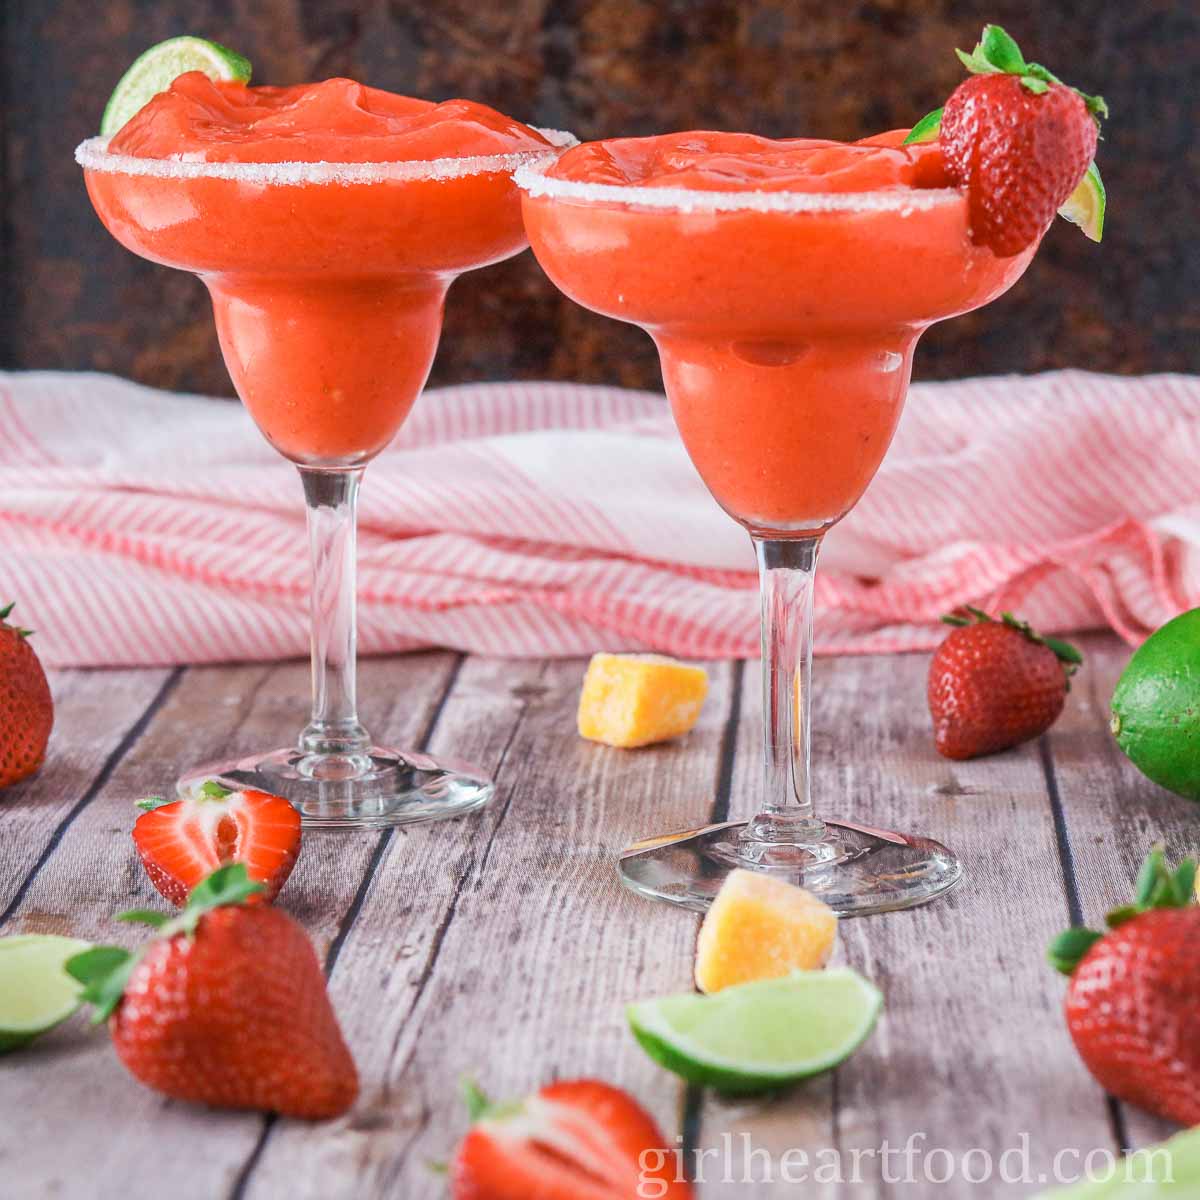 https://girlheartfood.com/wp-content/uploads/2020/07/Frozen-Strawberry-Mango-Margarita-2.jpg